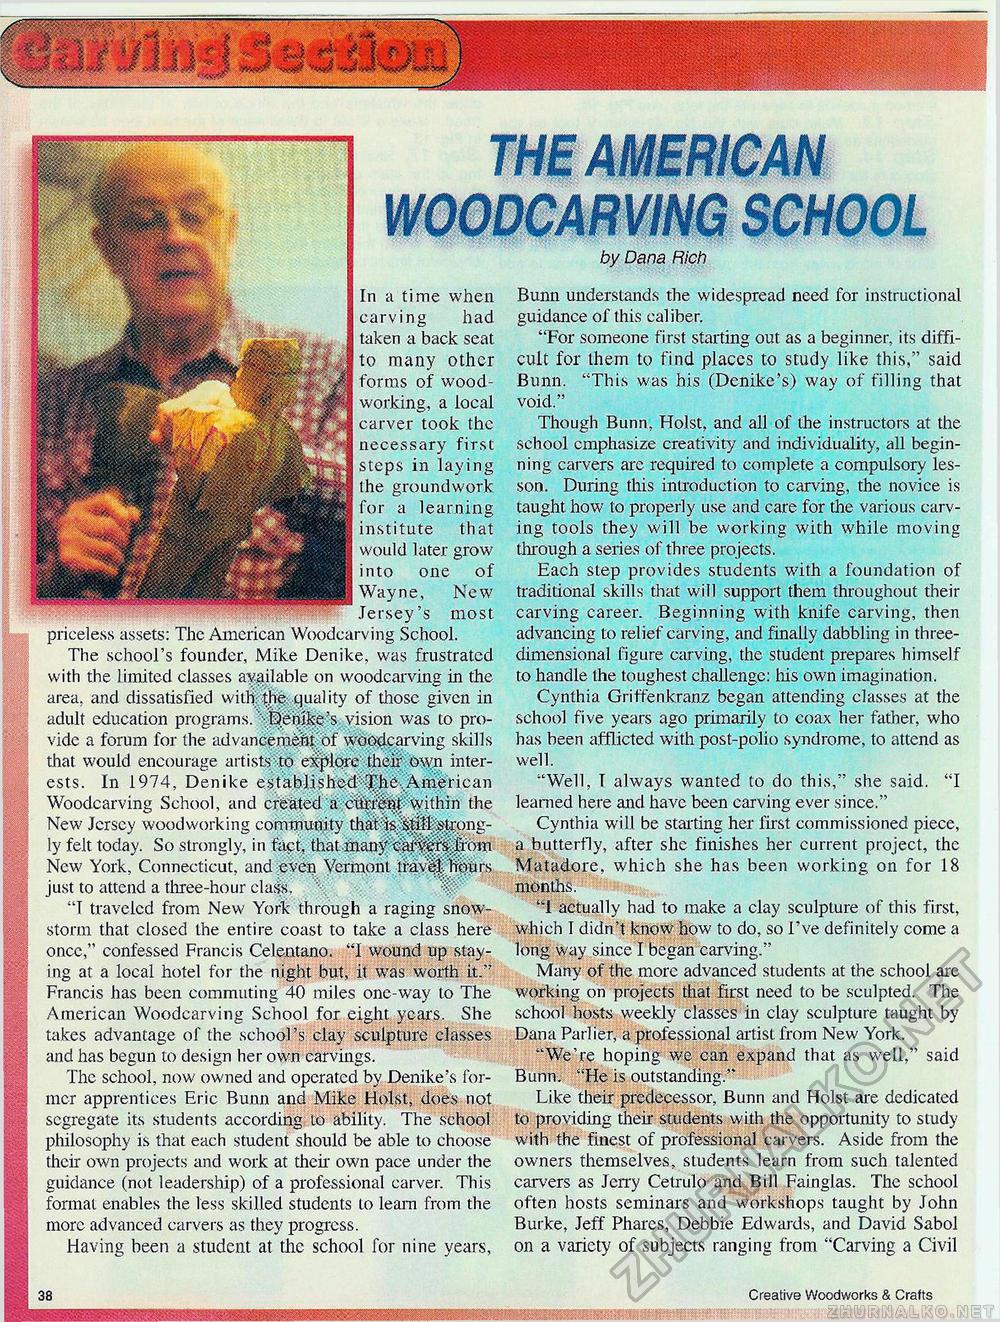 Creative Woodworks & crafts 1999-11,  38